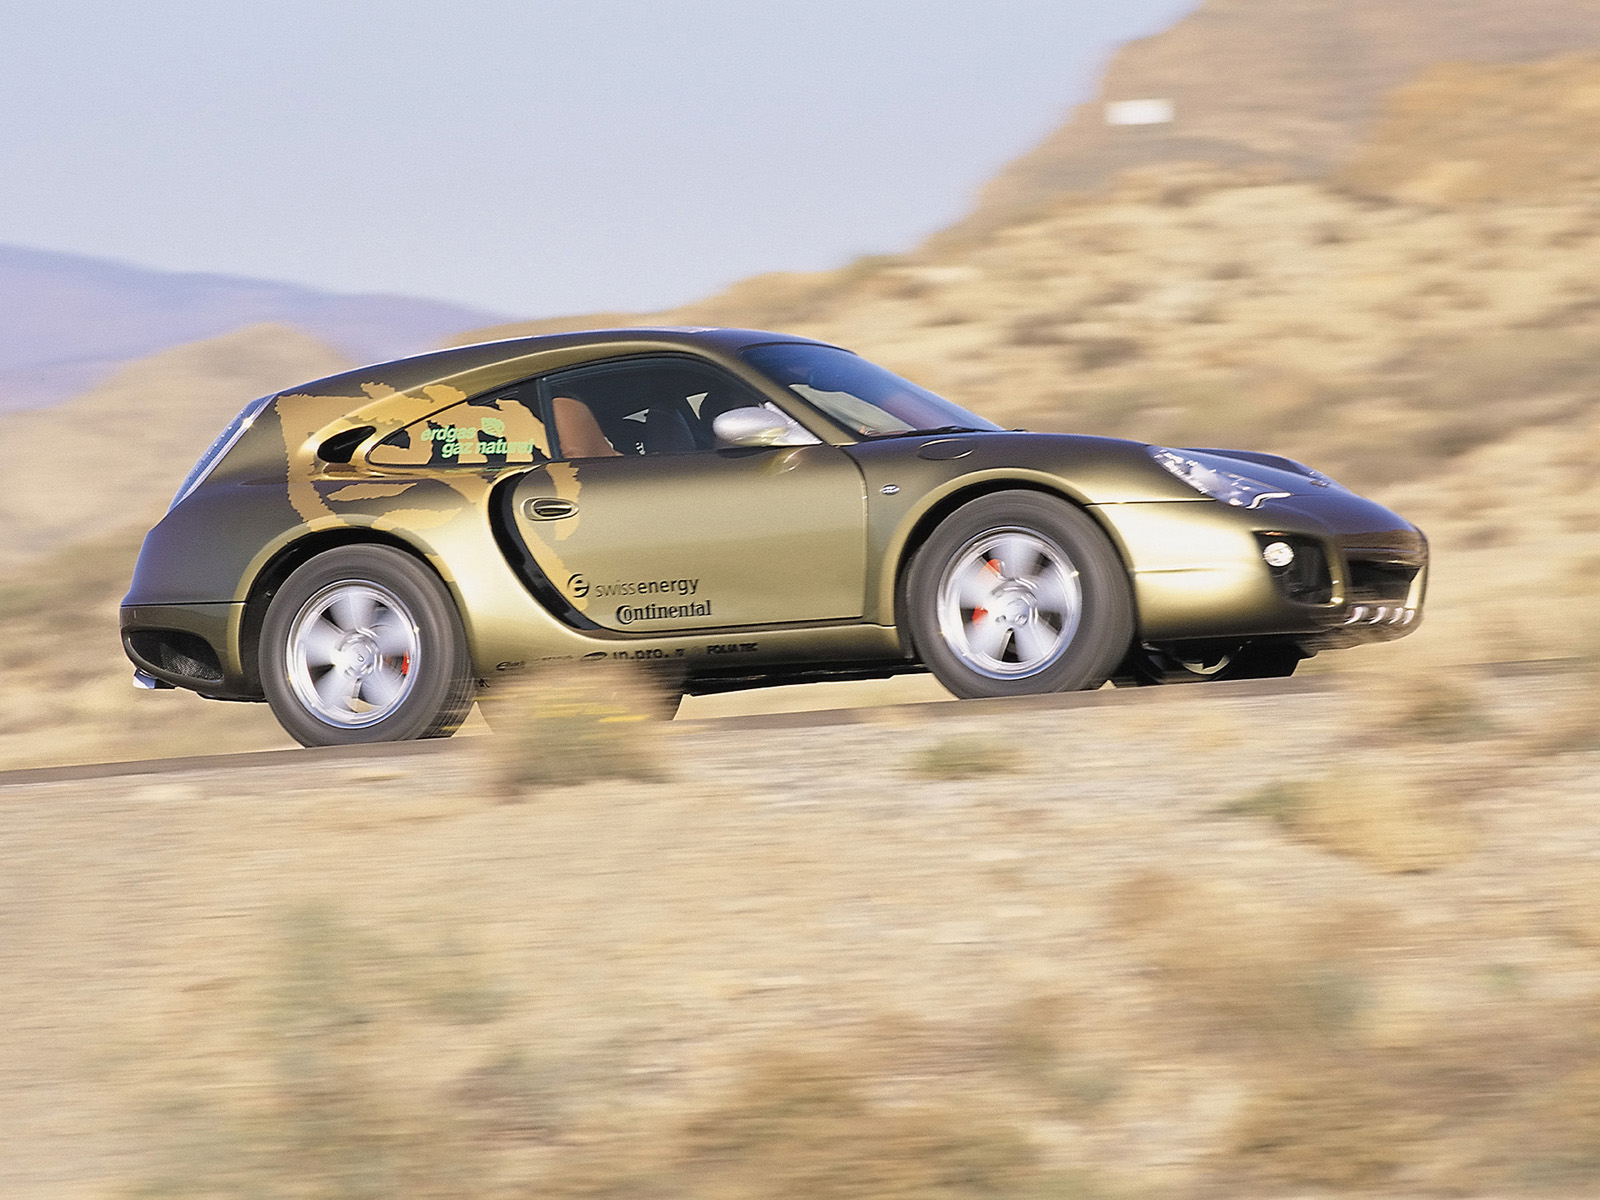 2003, Rinspeed, Porsche, Bedouin, 996, Turbo, Concept, Supercar, Pickup, Truck, Hw Wallpaper